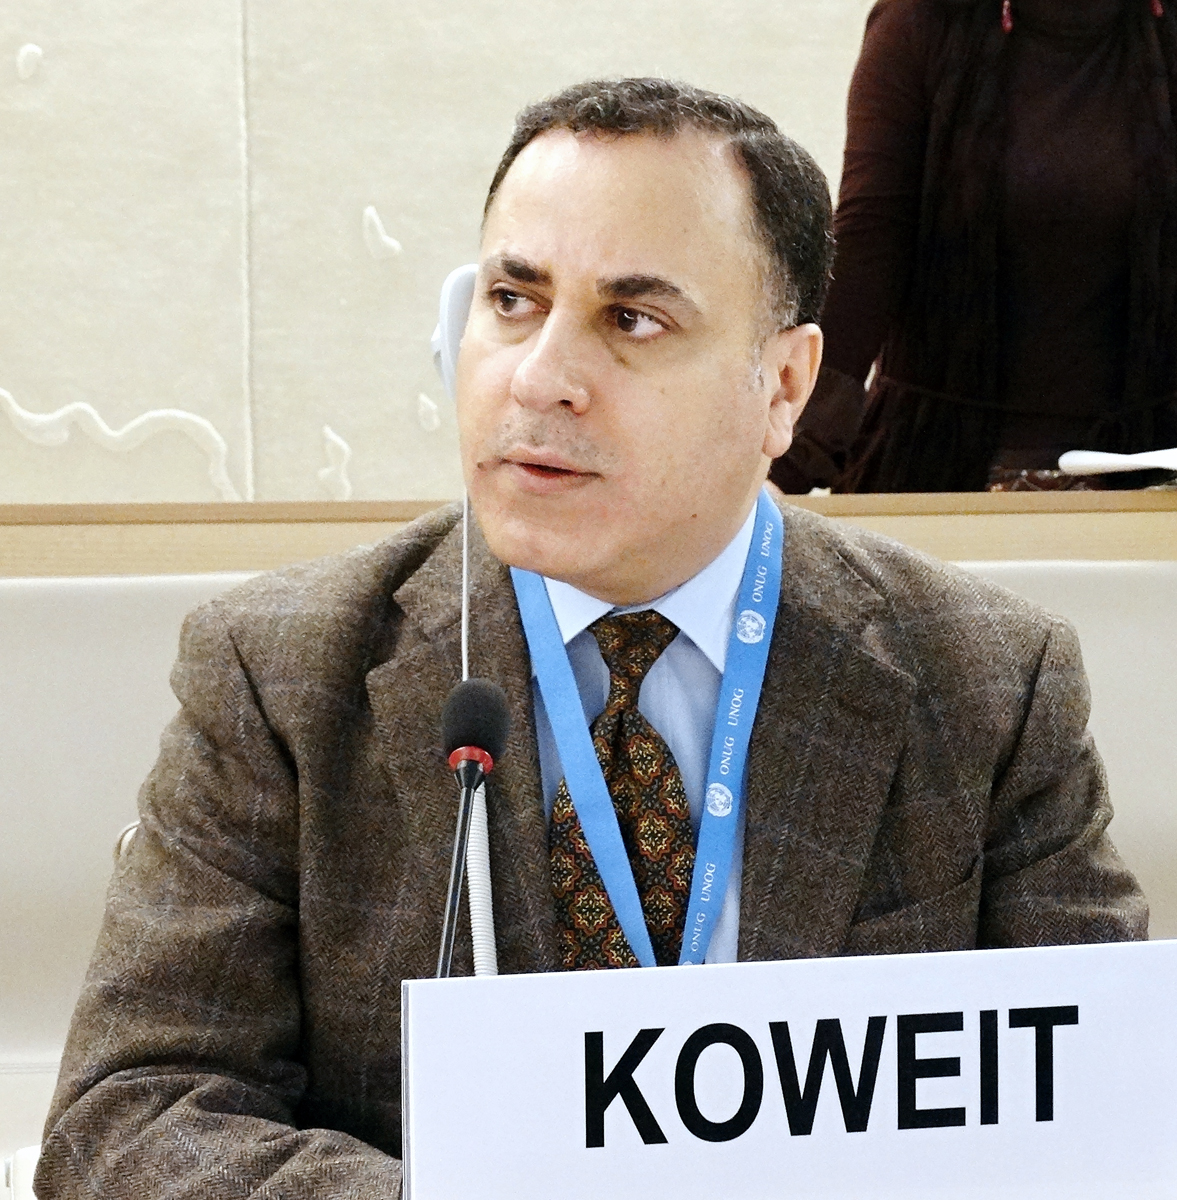 Kuwaiti permanent delegate to the UN and international organization headquarters in Geneva Ambassador Jamal Al-Ghunaim